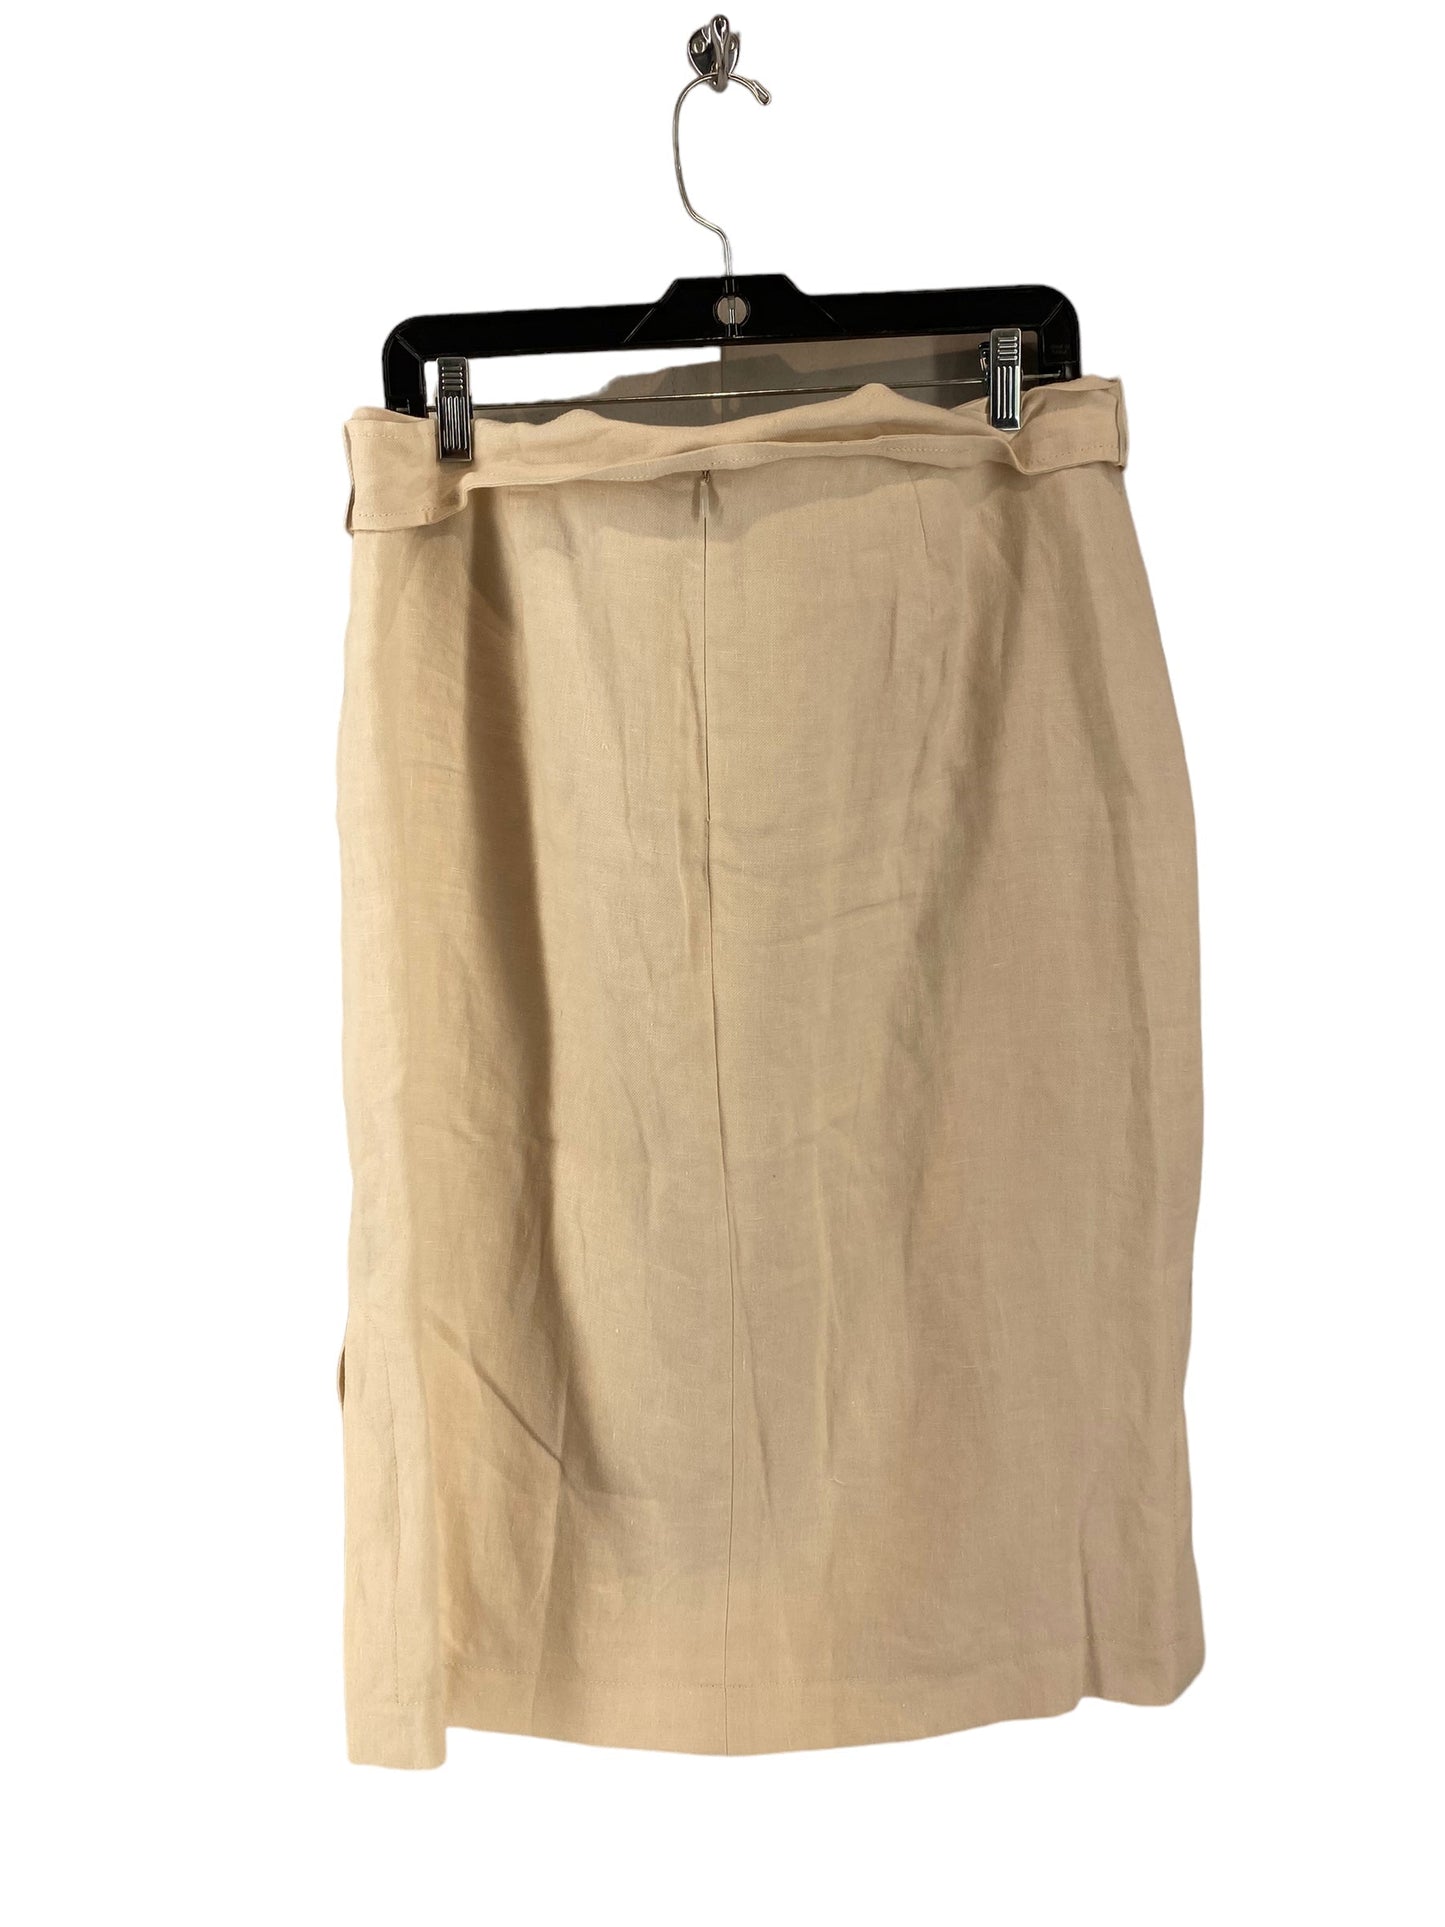 Skirt Midi By Talbots  Size: 14petite